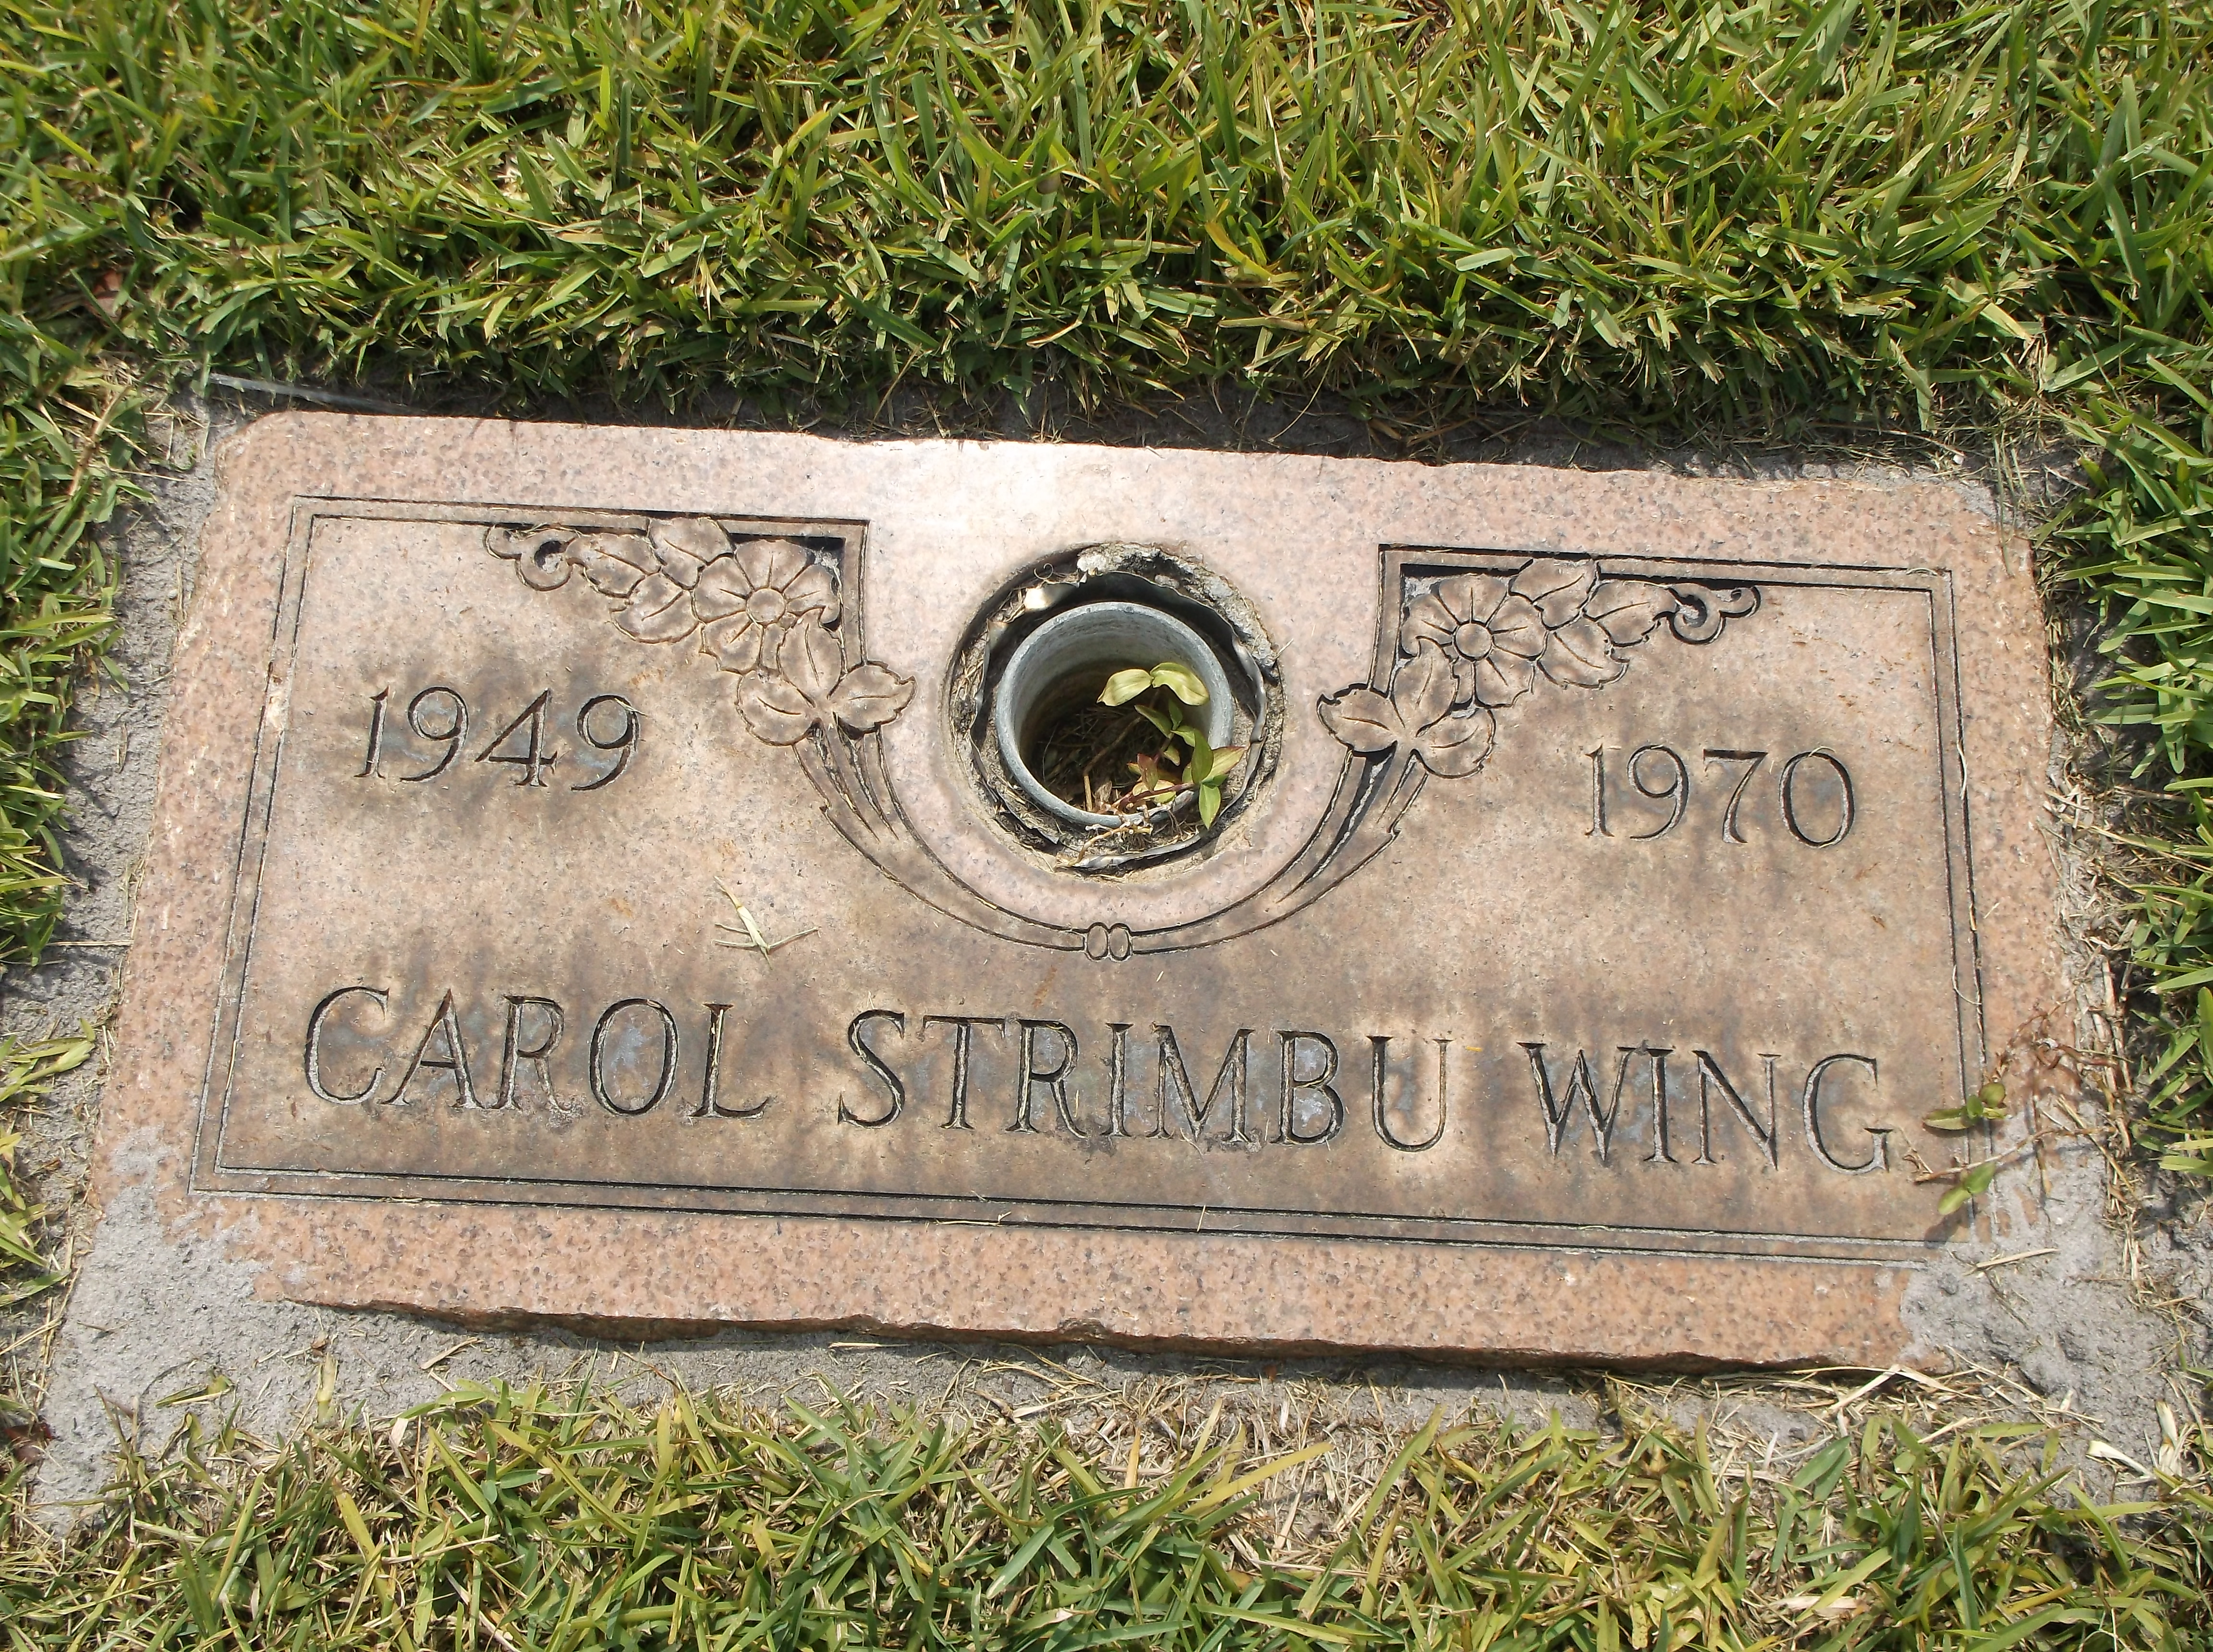 Carol Strimbu Wing